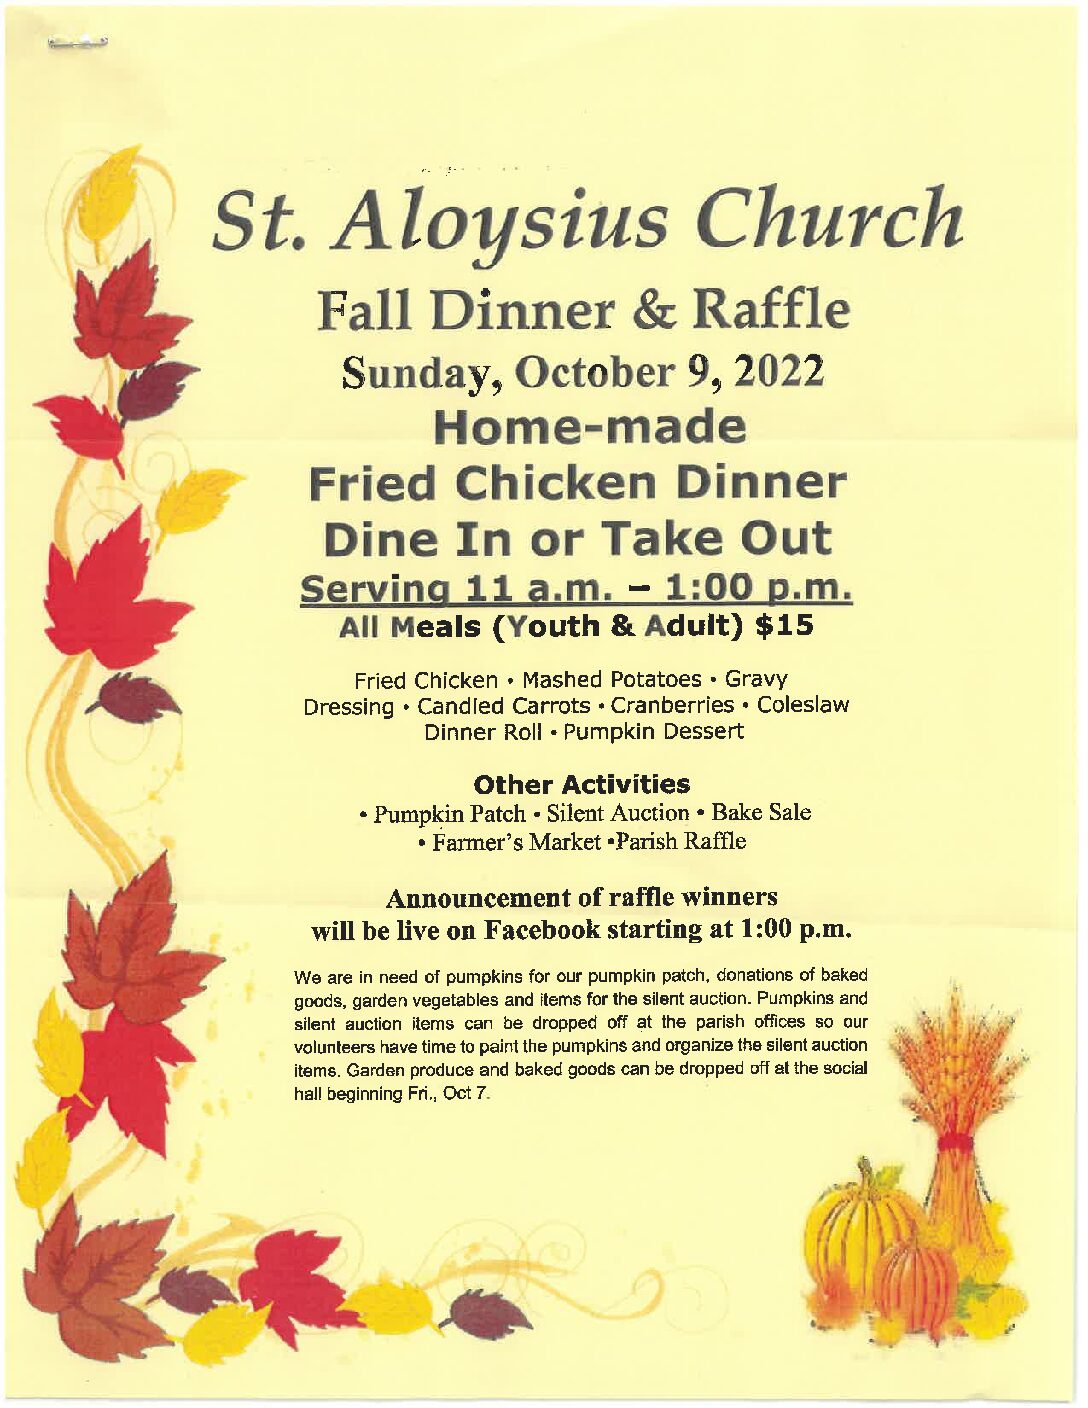 <h1 class="tribe-events-single-event-title">St. Aloysius Church Fall Dinner & Raffle</h1>